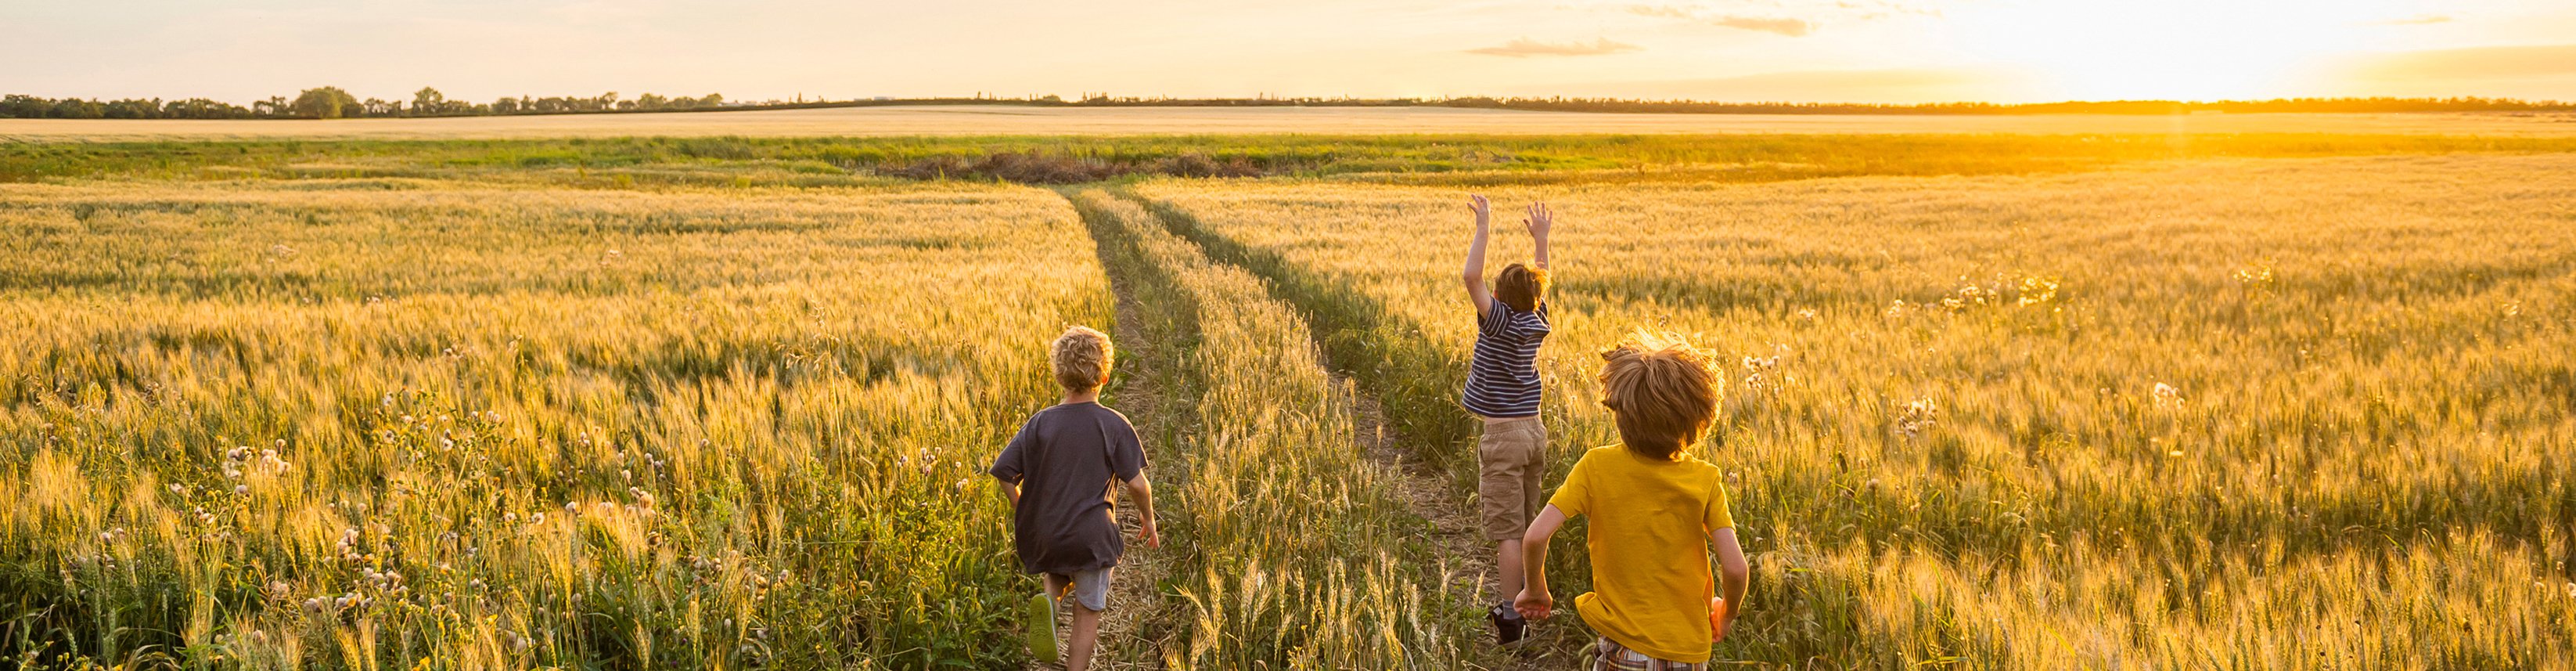 Children running happily through field of grain toward sunset